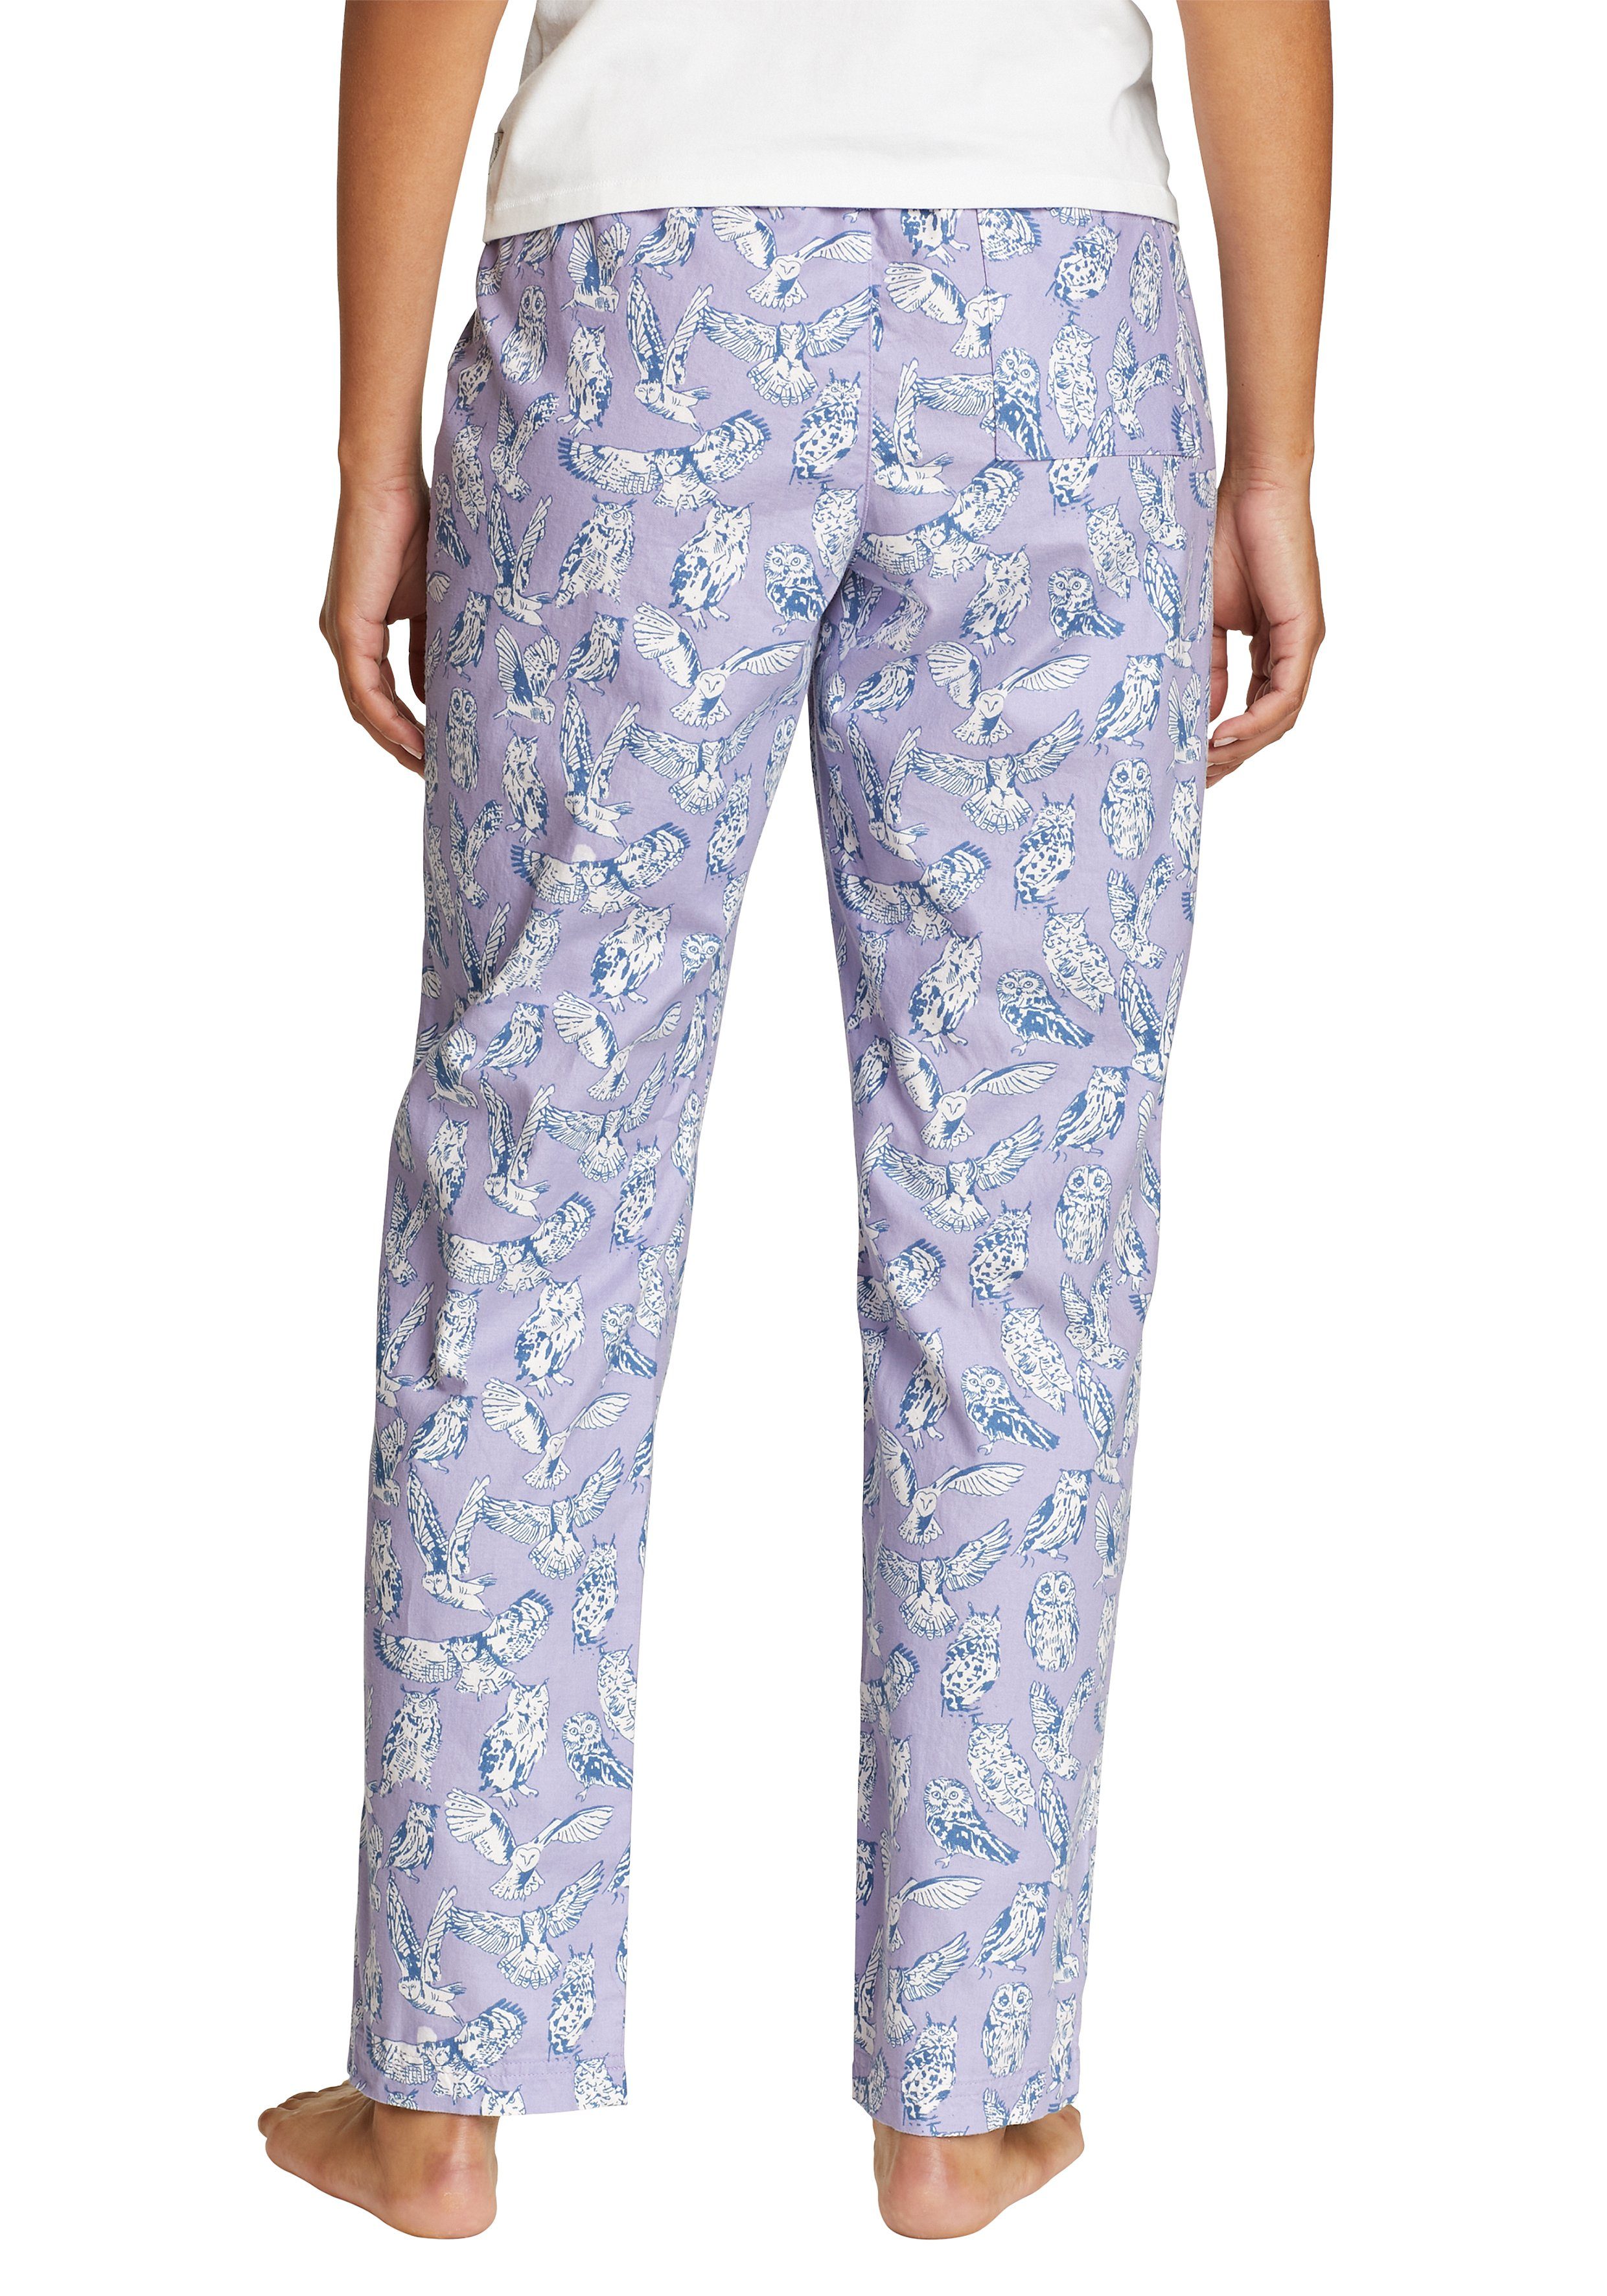 Lavendel Stine's Flanell Pyjamahose Eddie Bauer Pyjamahose